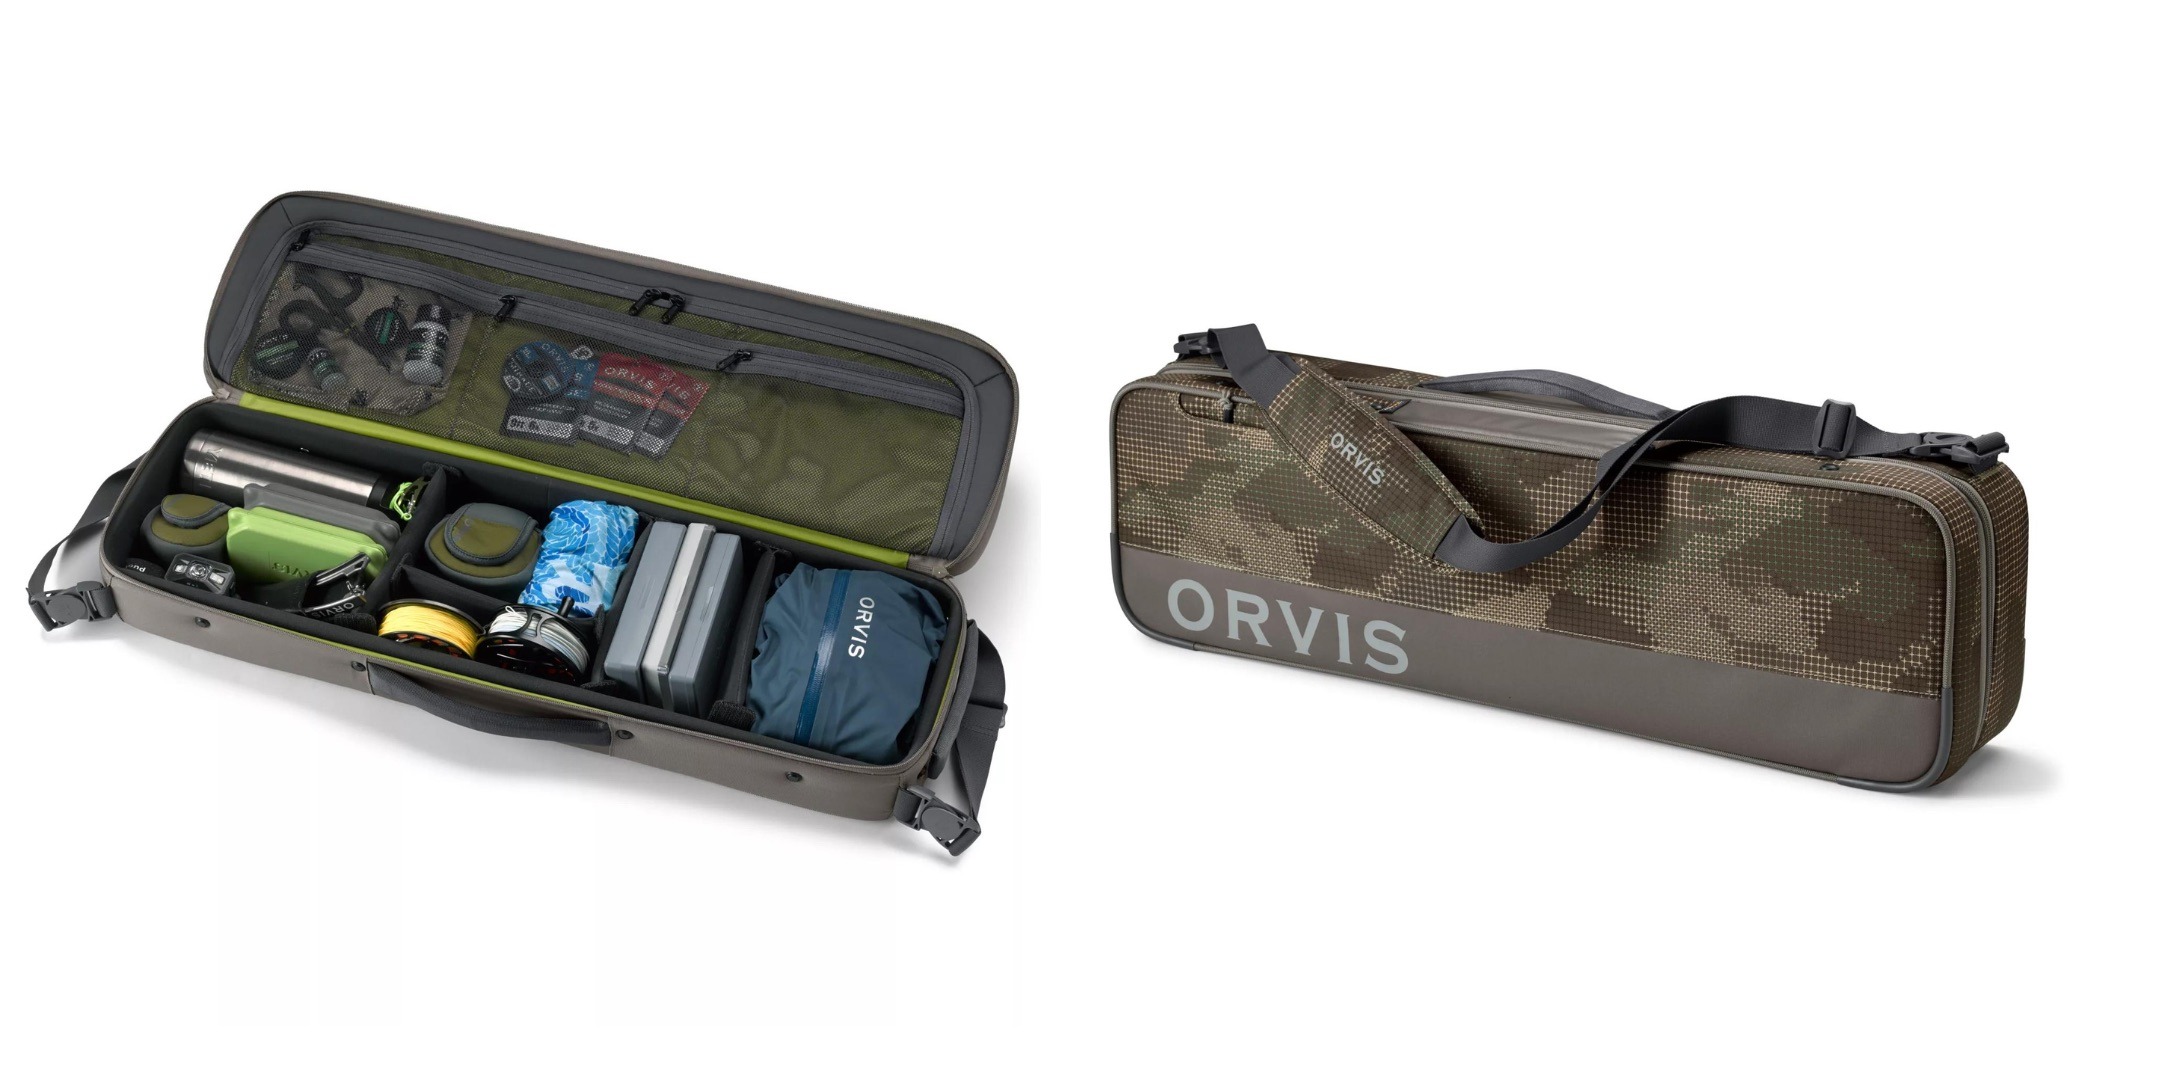 Orvis Fishing Bag  Bags, Fish in a bag, Orvis